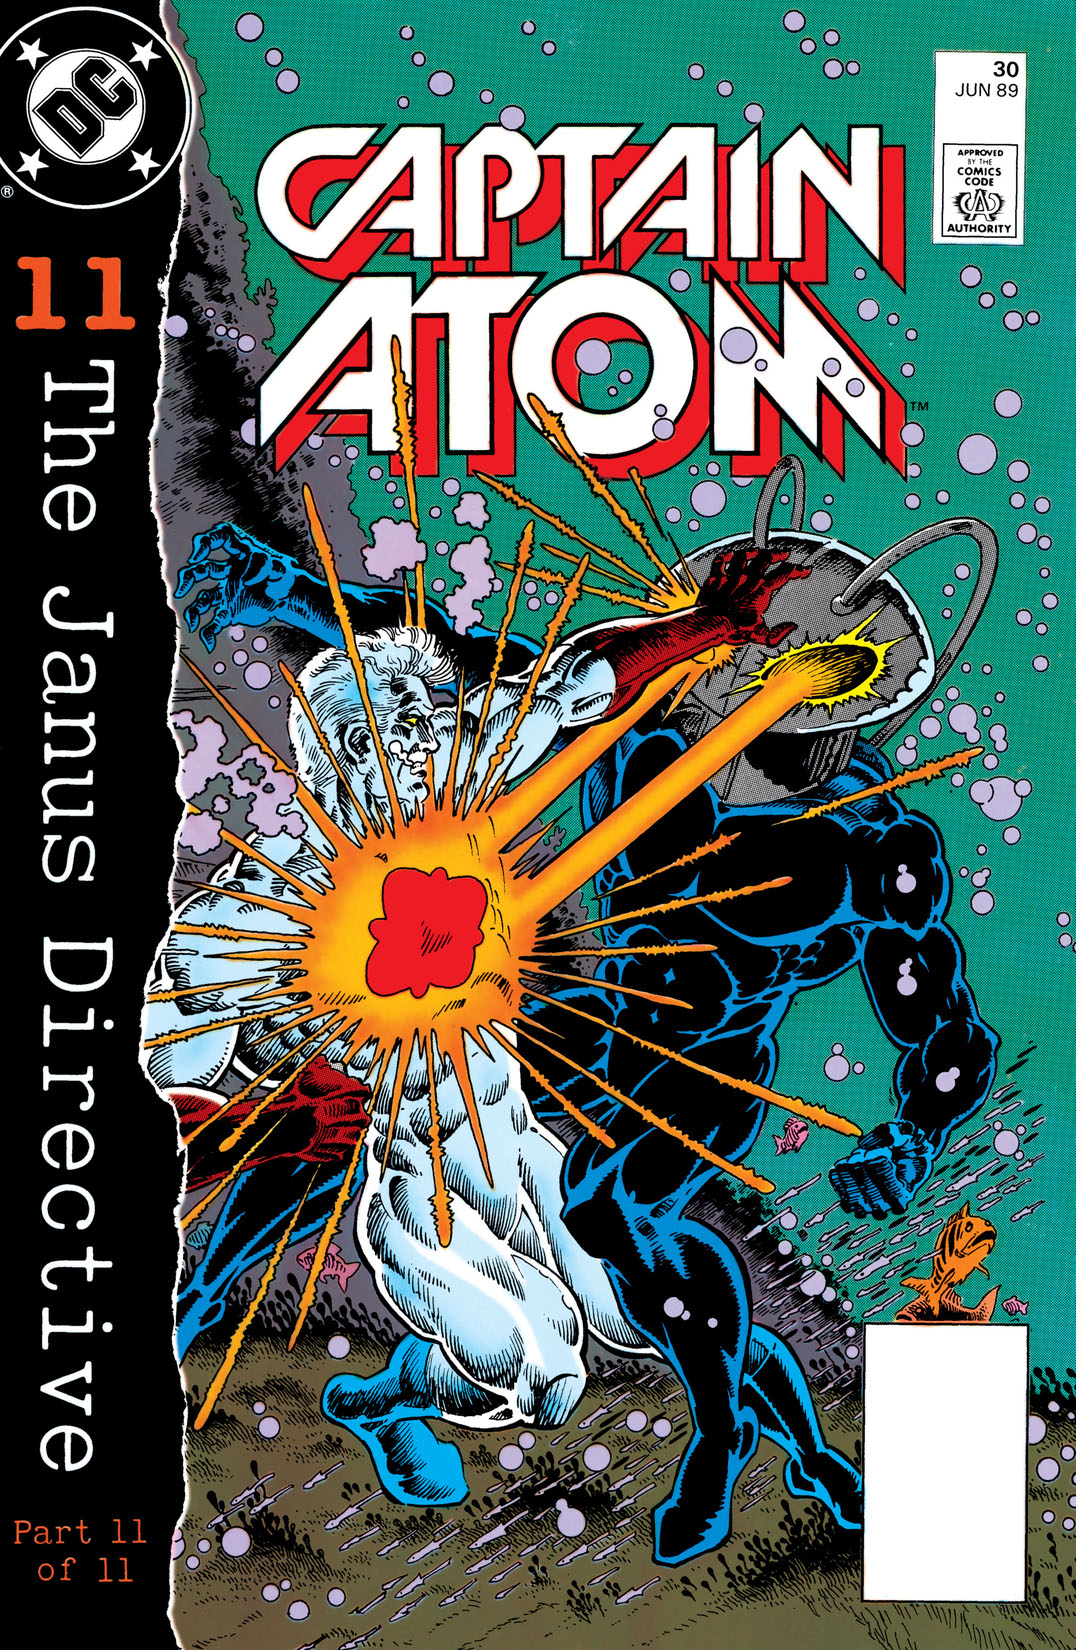 Captain Atom (1986-1992) #30 preview images